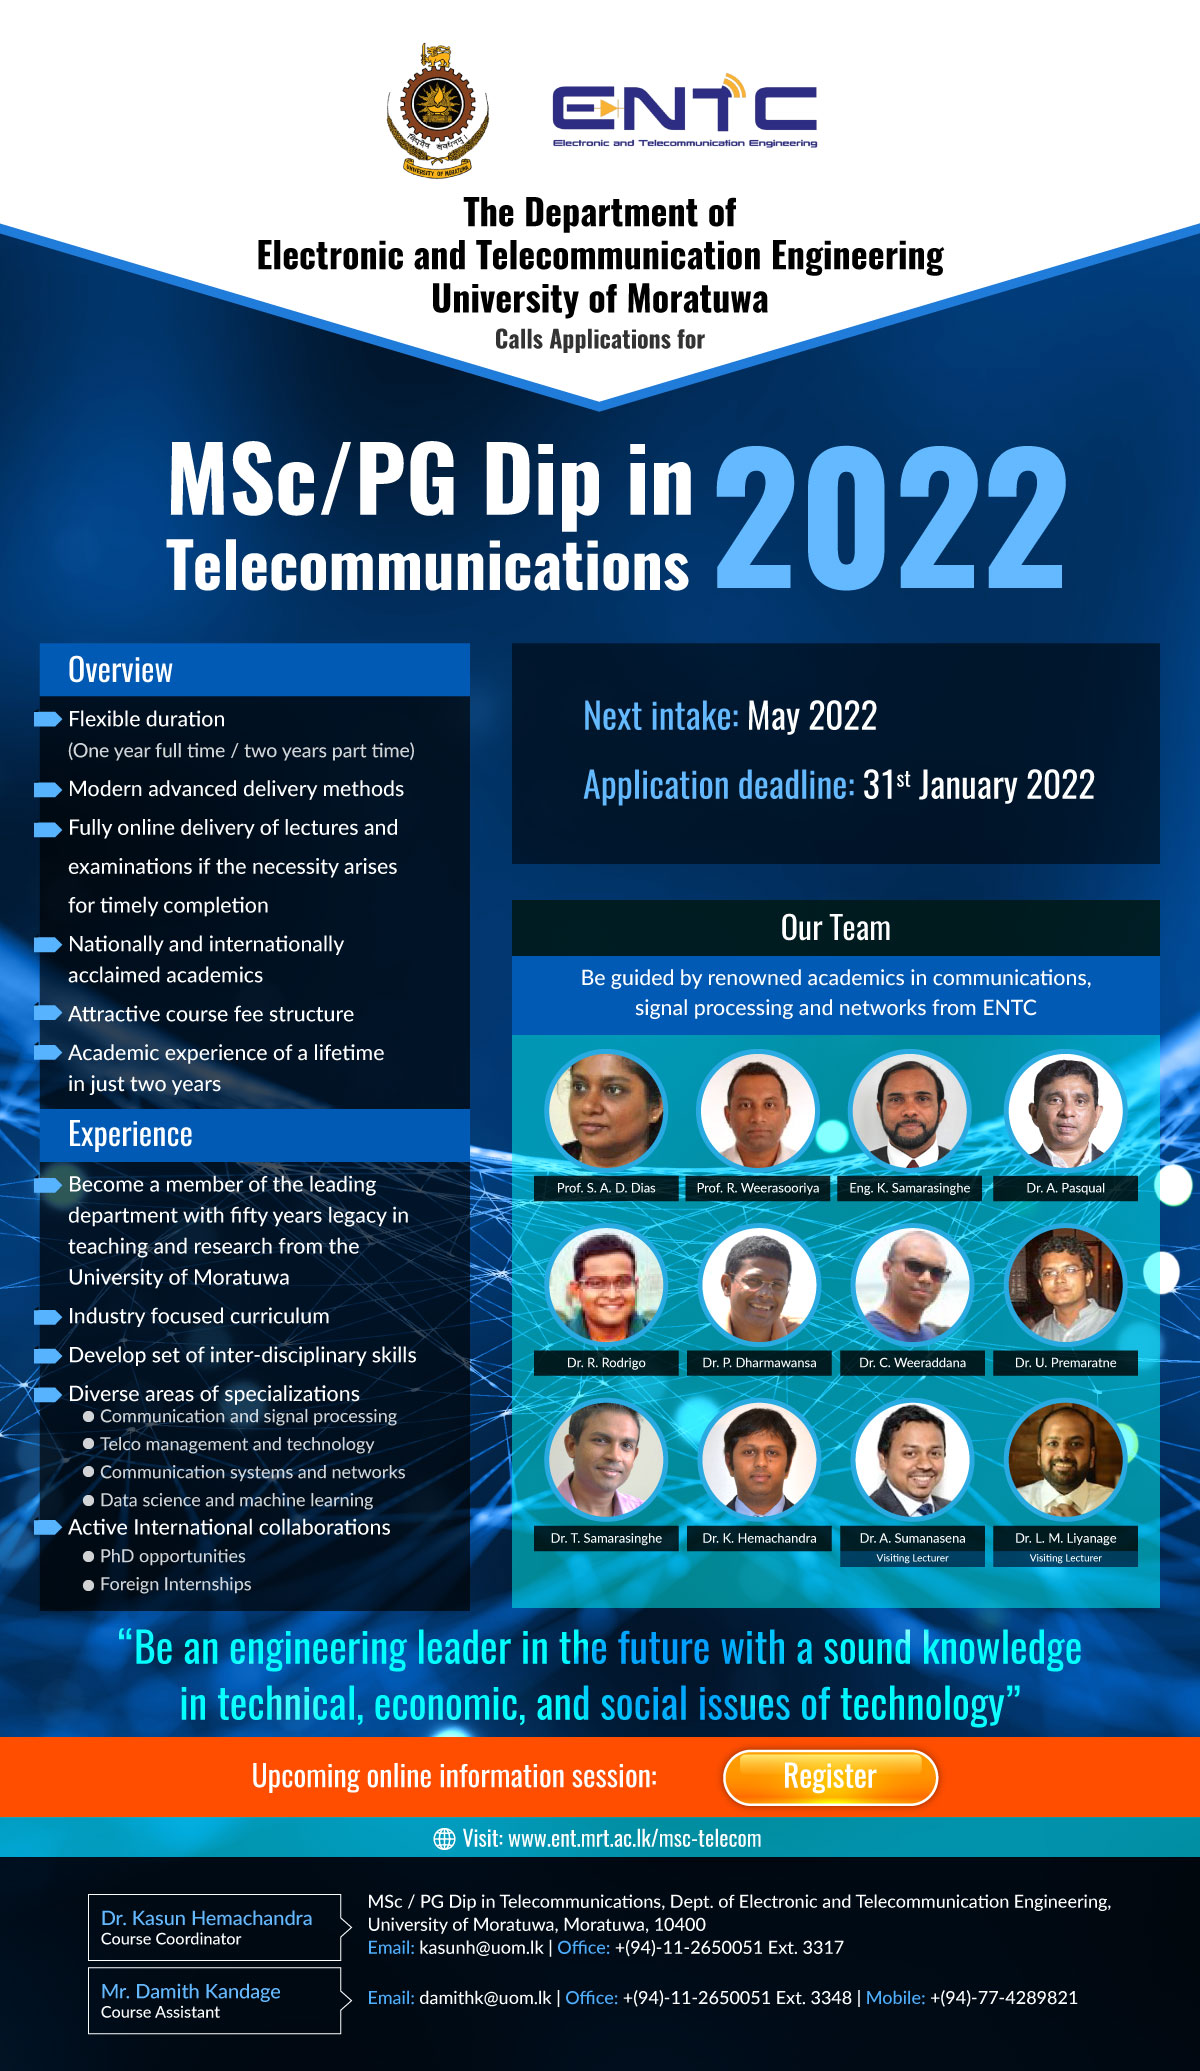 MSc/PG Dip in Telecommunications 2022